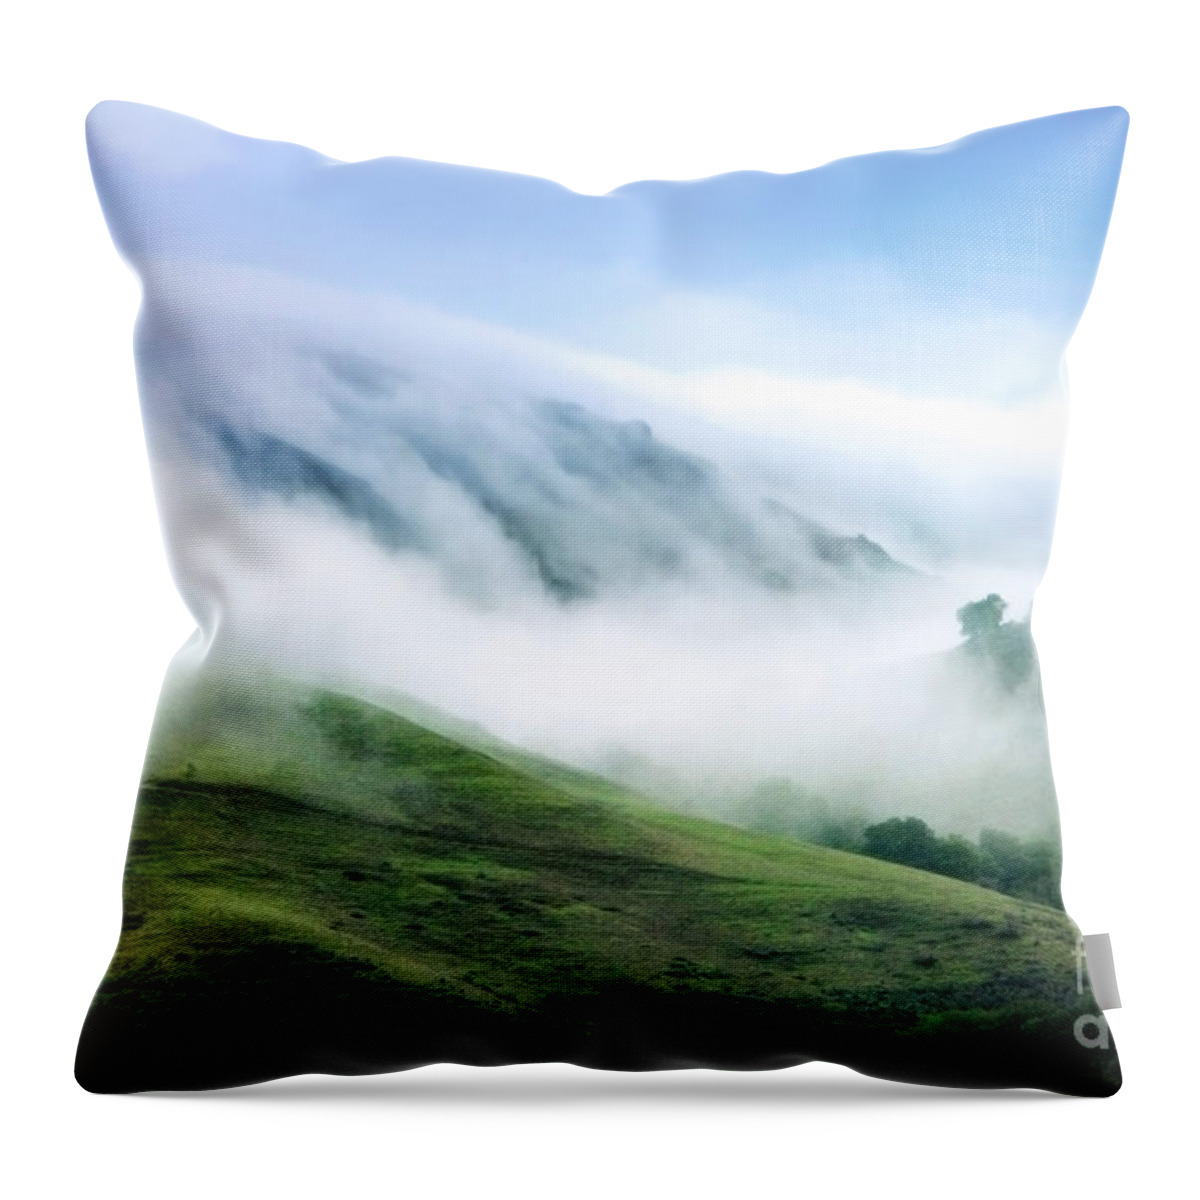 Hills Throw Pillow featuring the photograph Morning Fog by Ellen Cotton